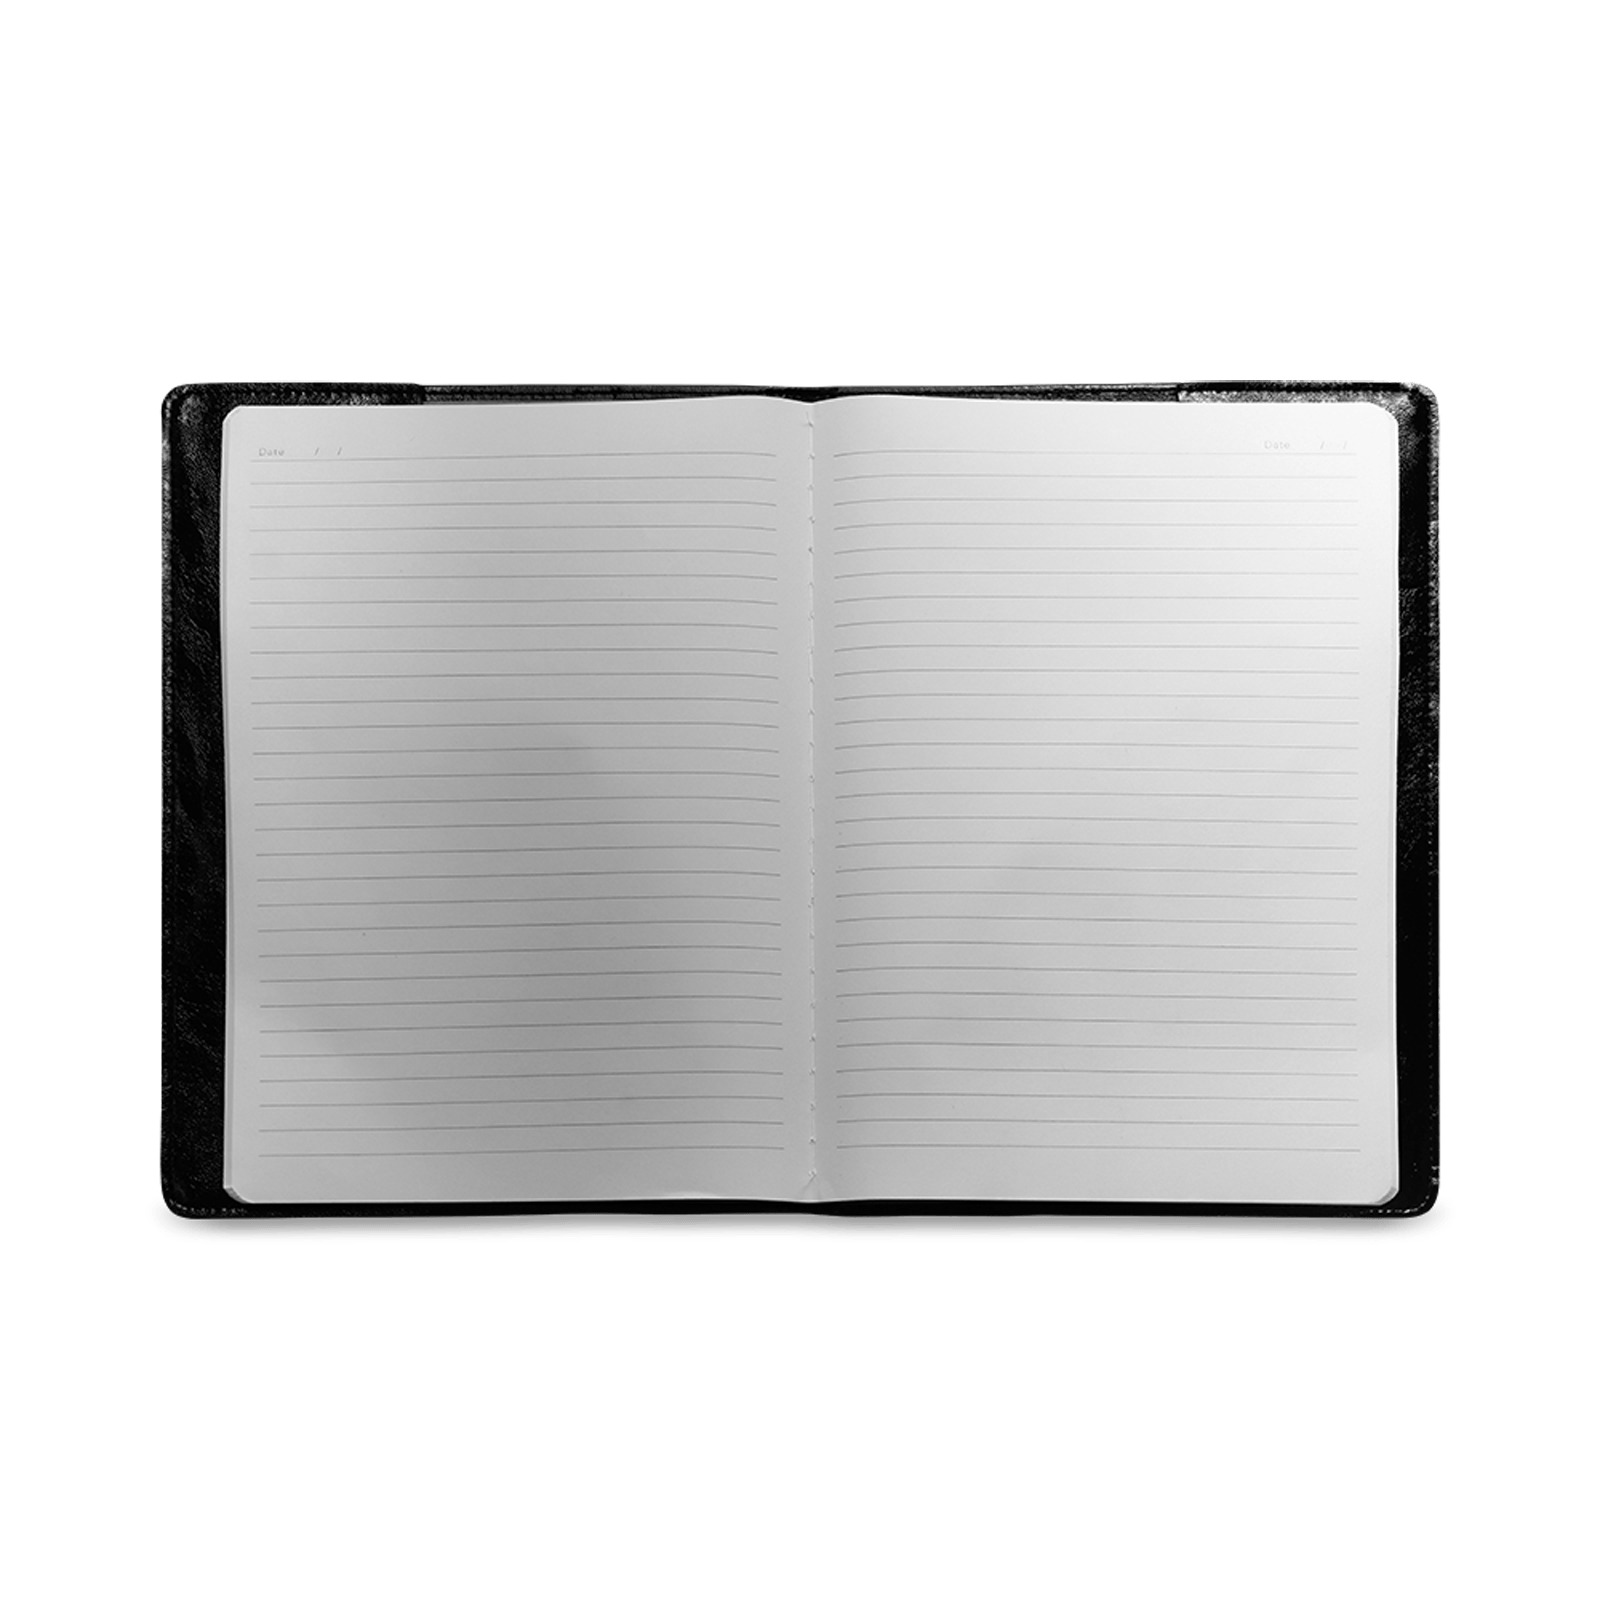 bb mjklyr Custom NoteBook B5